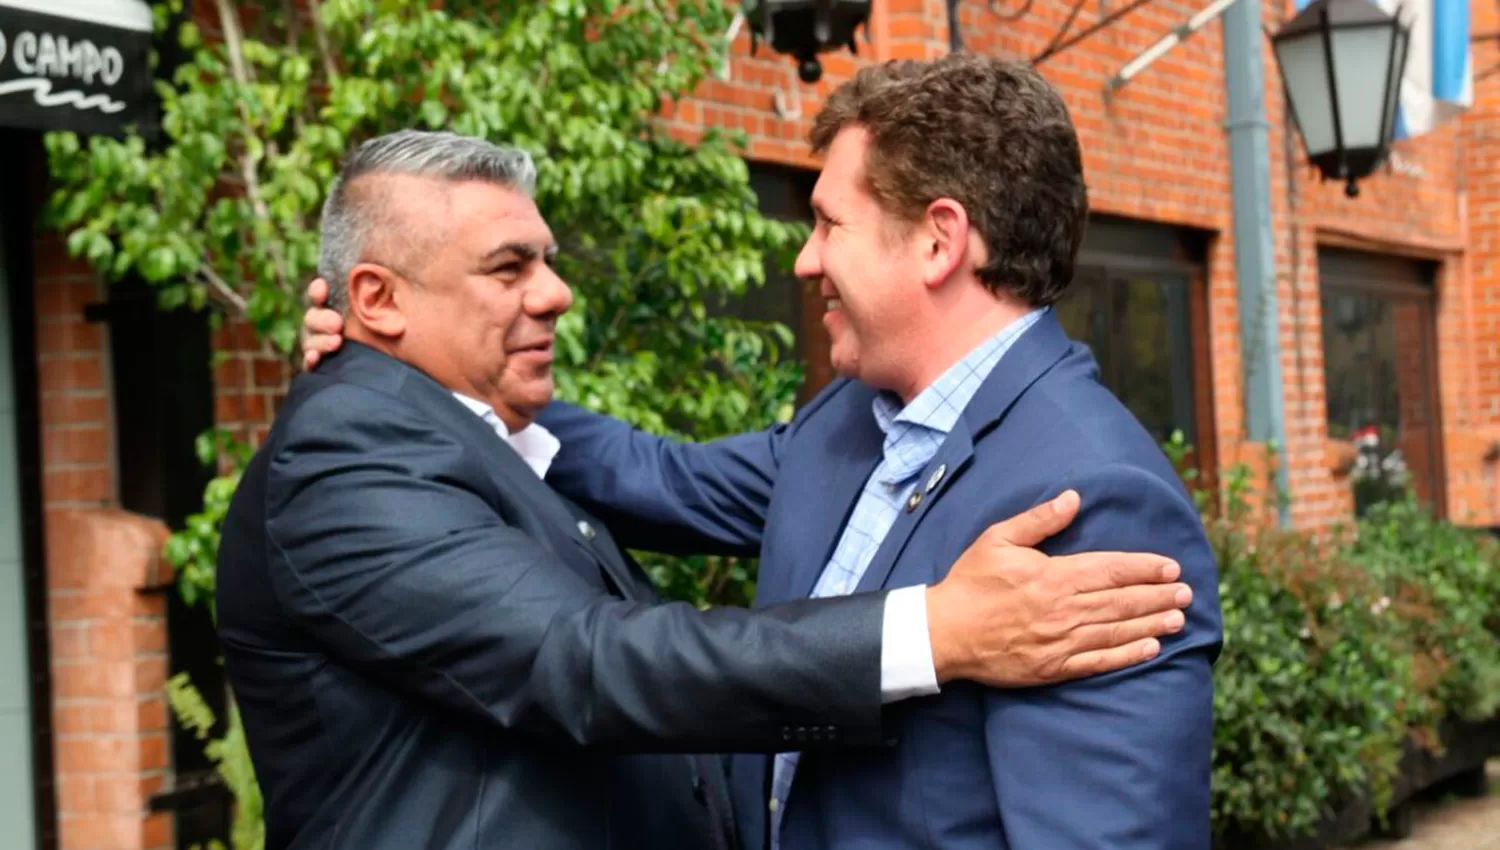 Claudio Tapia, junto al presidente de Conmebol, Alejandro Domínguez.
FOTO TOMADA DE PRENSA AFA